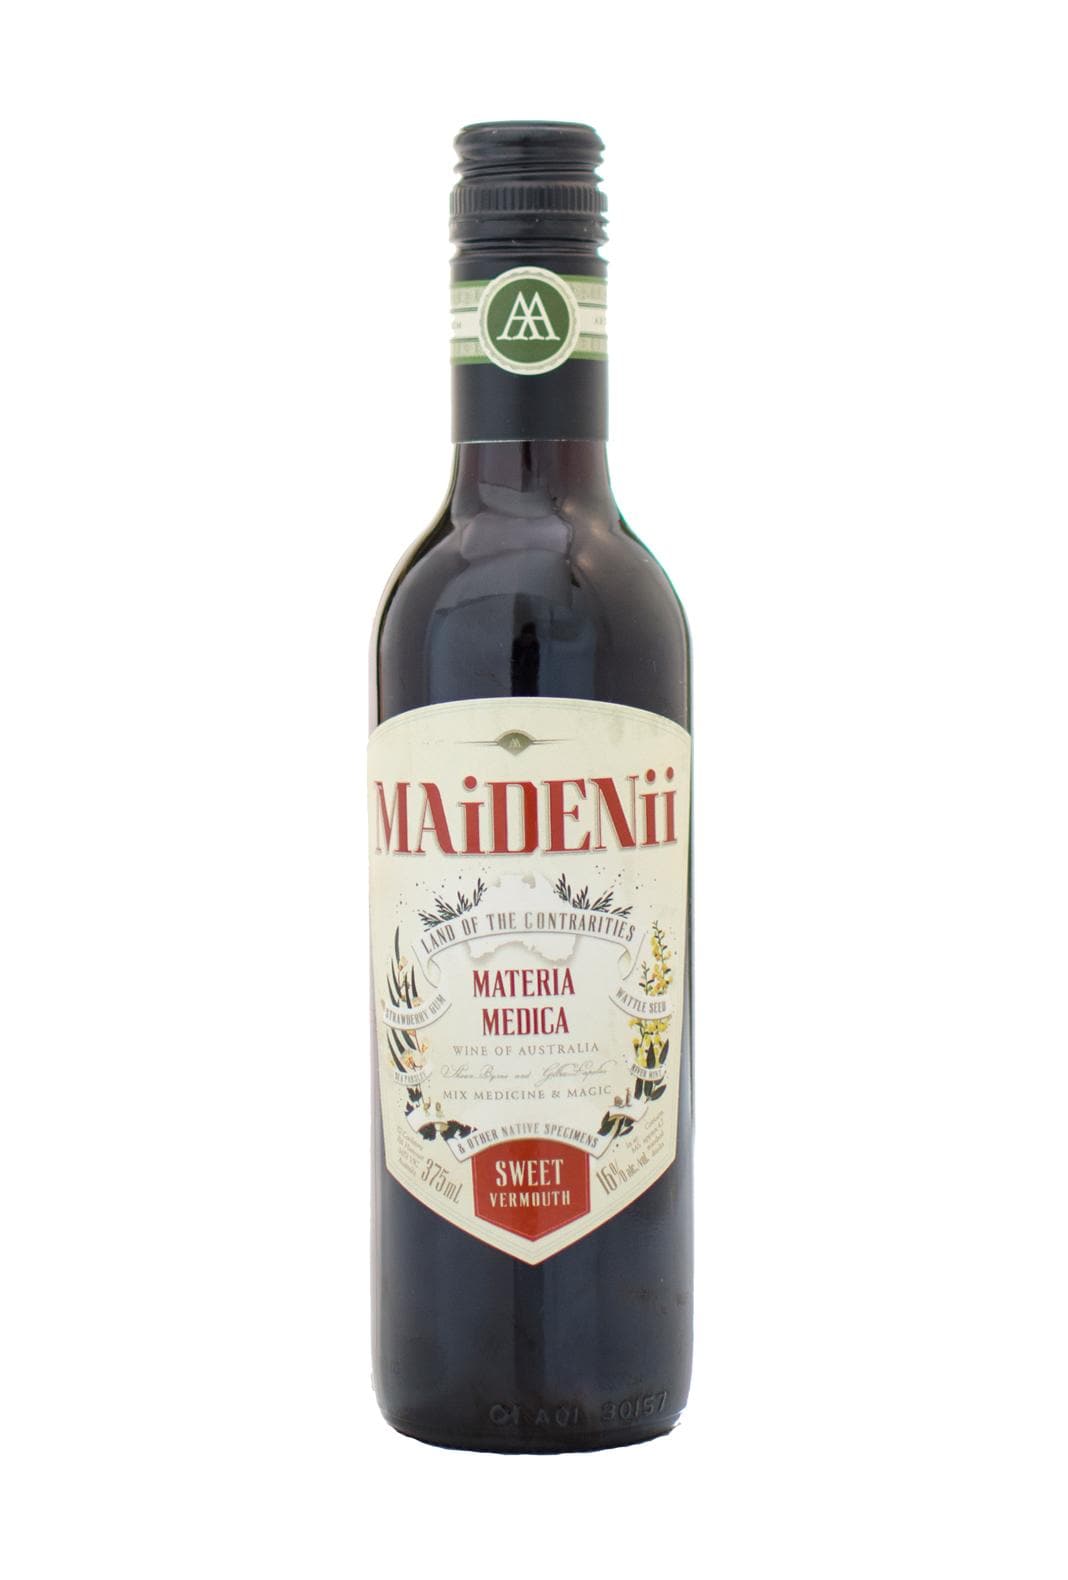 Maidenii Sweet Vermouth 375ml 16% | Liquor & Spirits | Shop online at Spirits of France